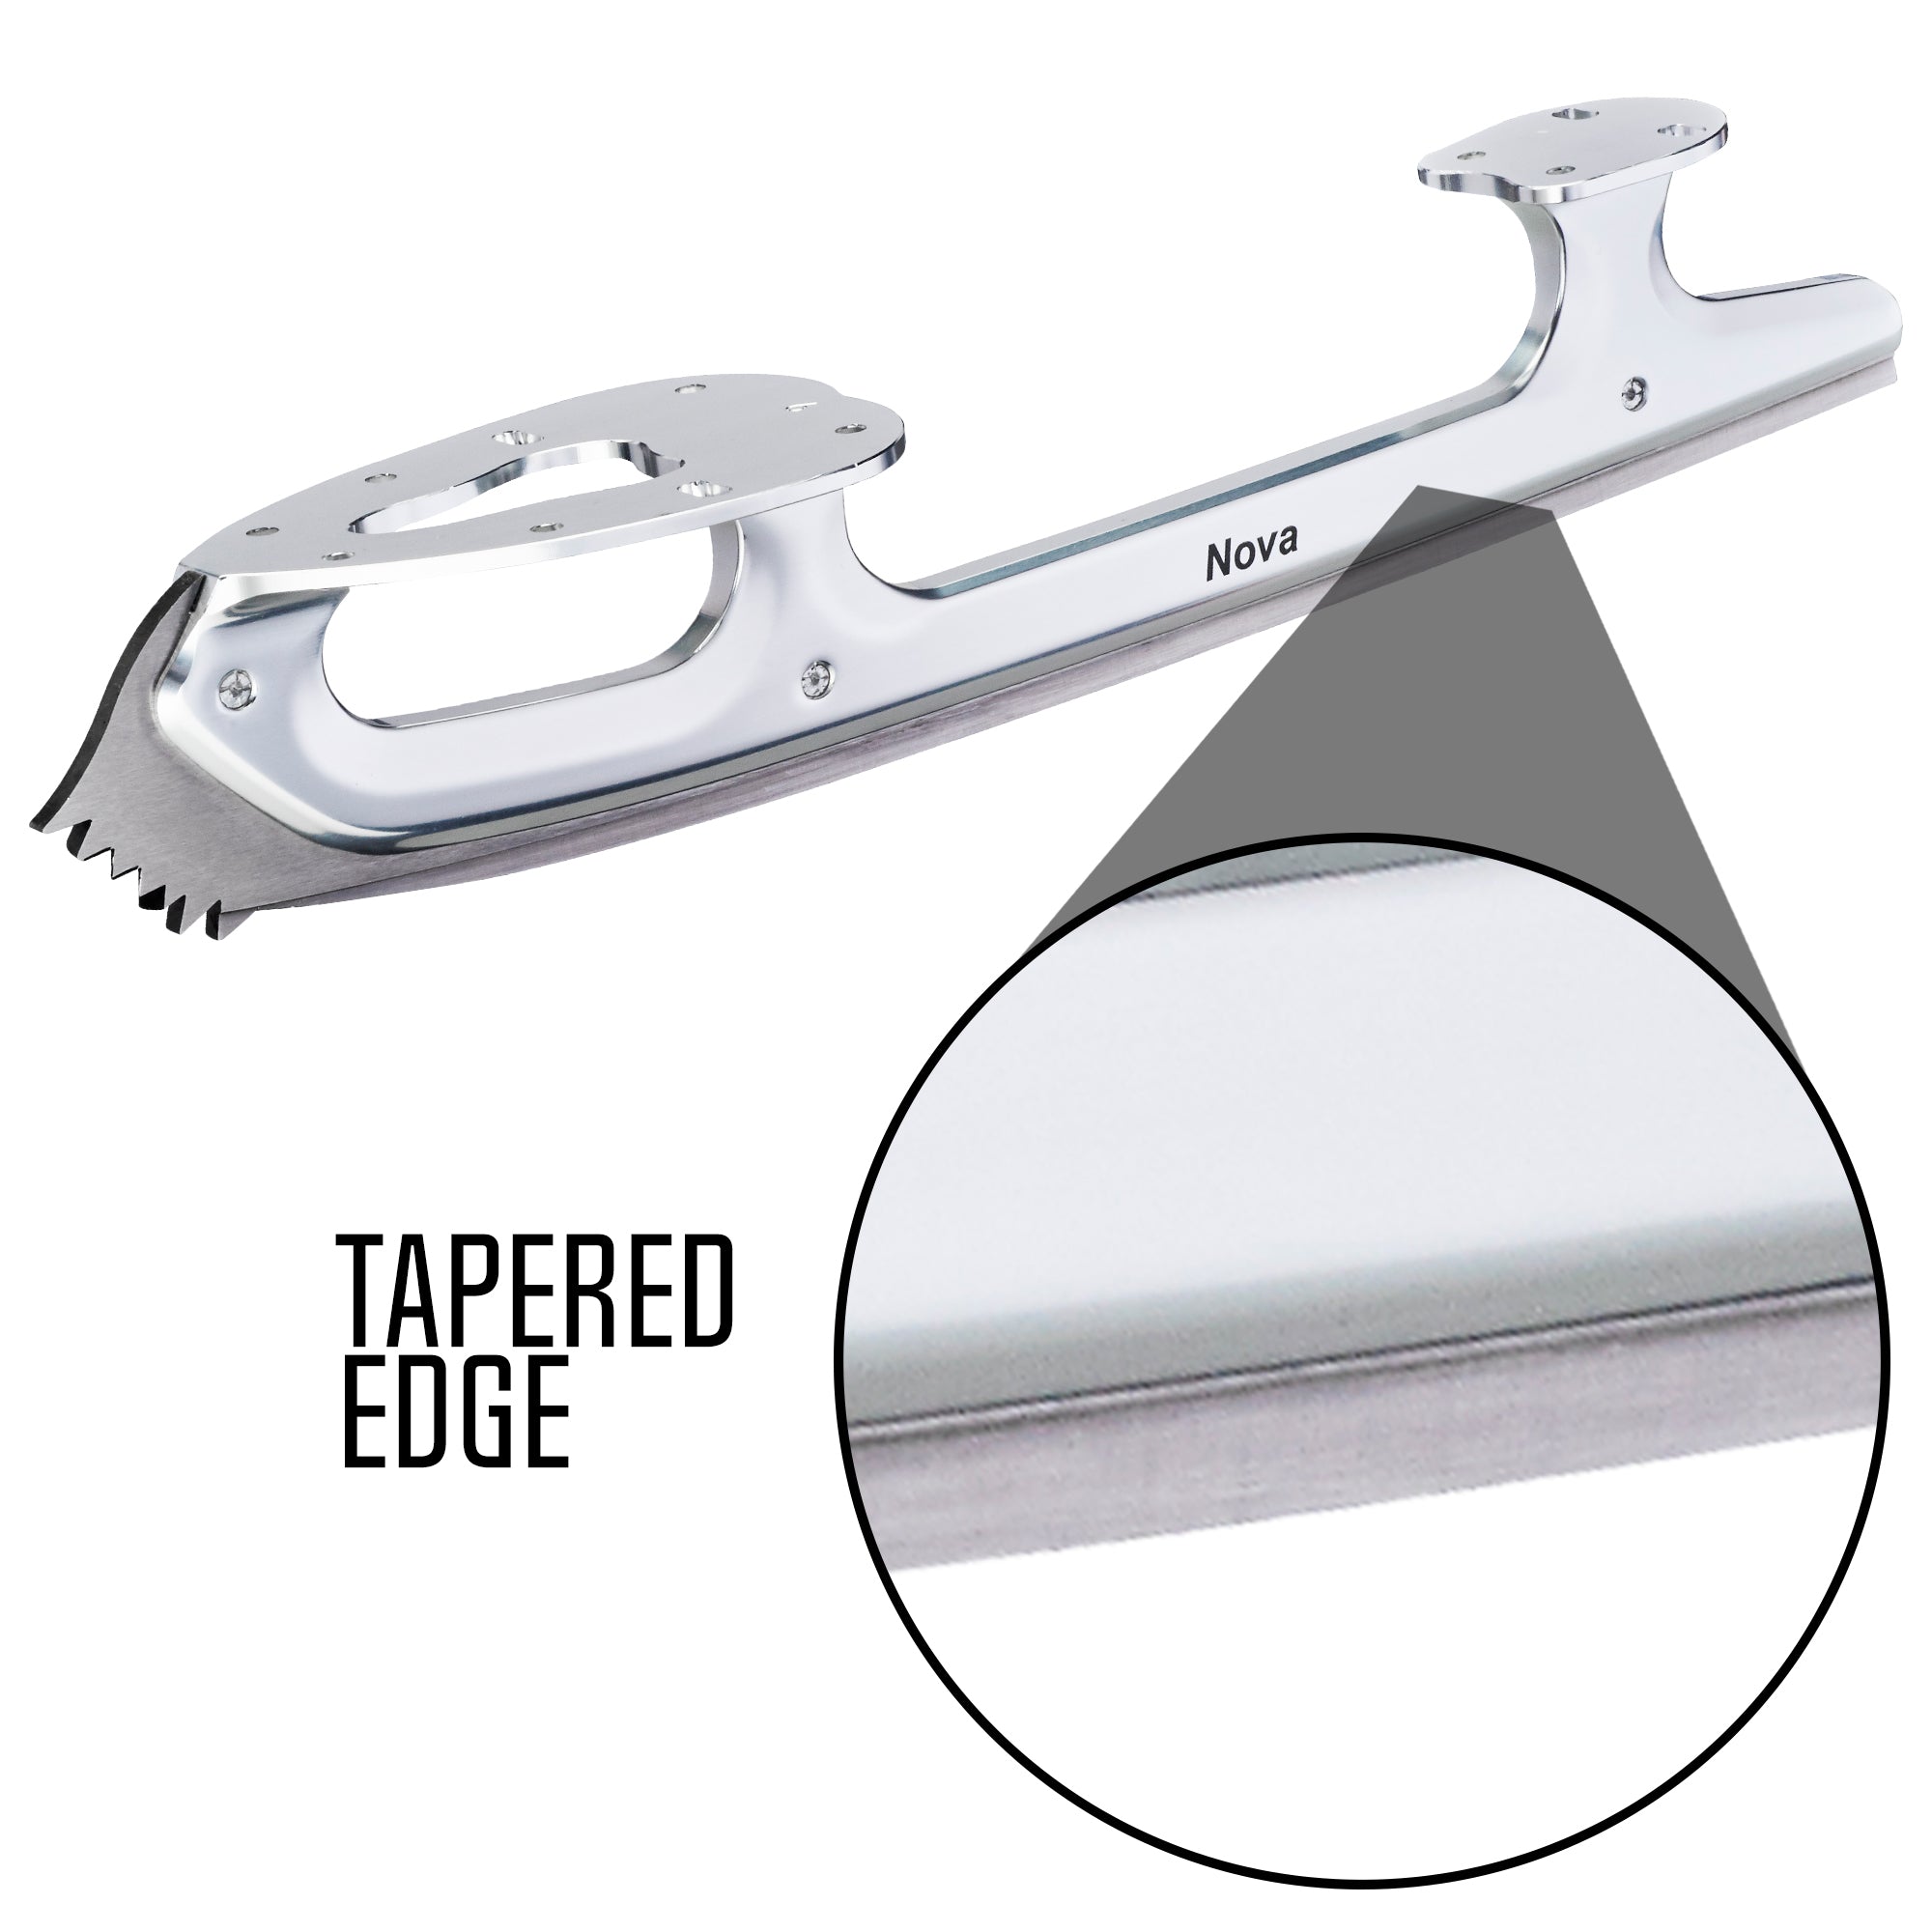 Matrix Nova blade aluminum chassis 33% lighter tapered edge AUS8 steel blade